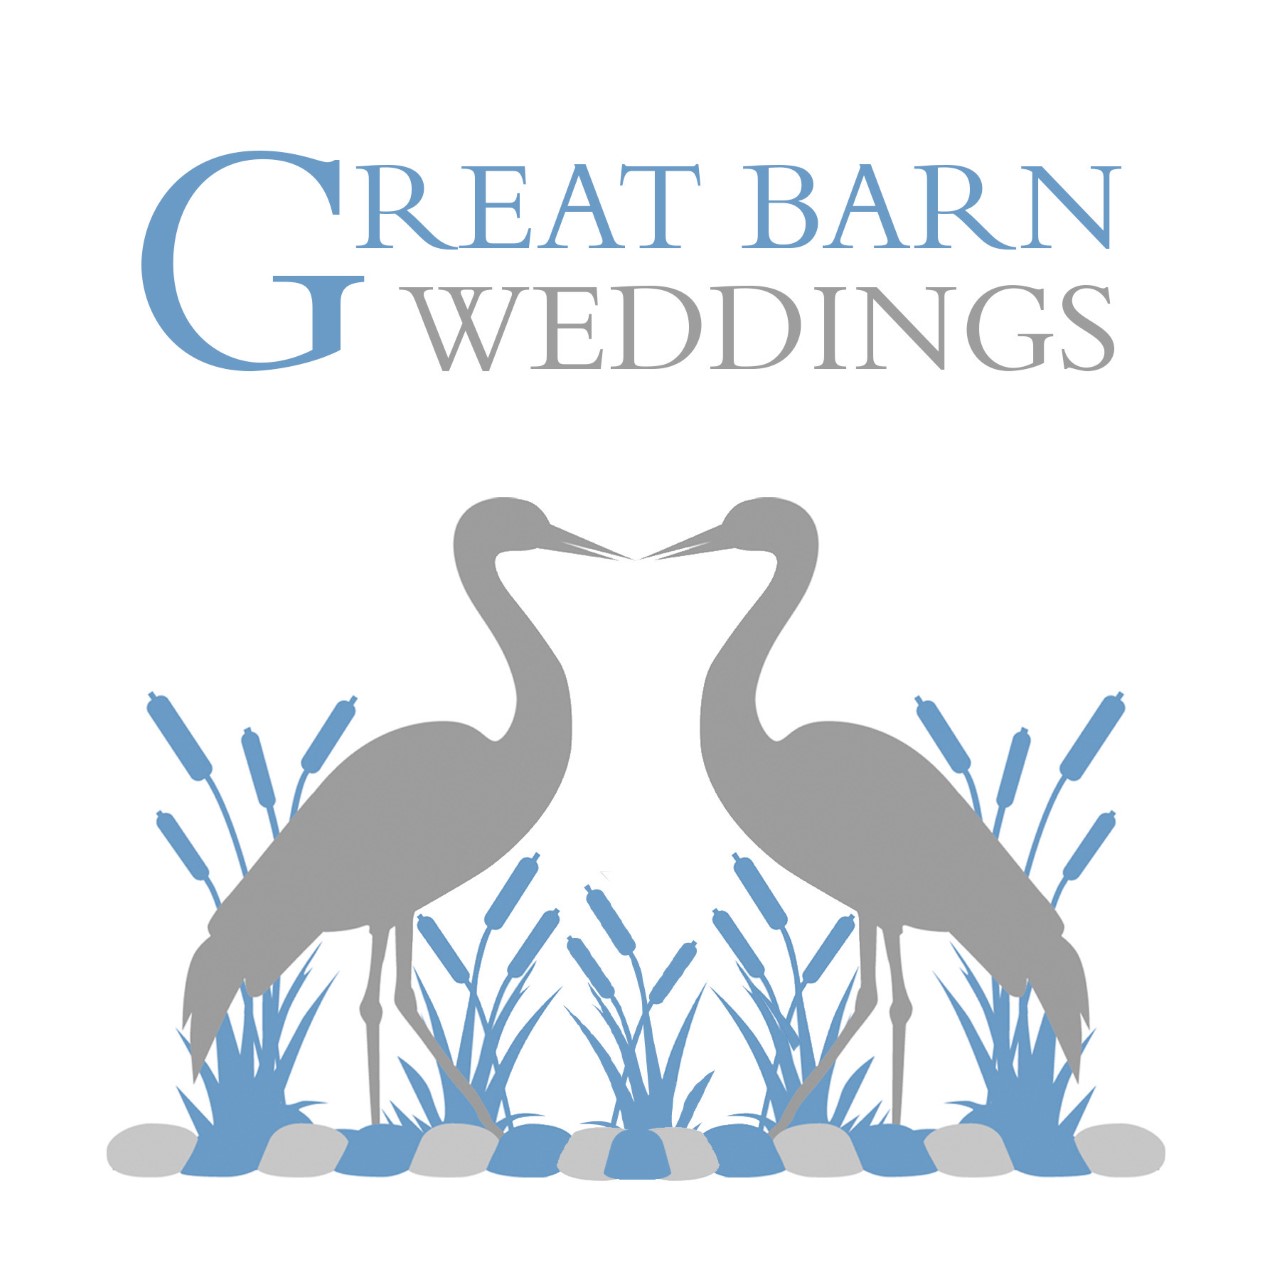 Great Barn Weddings